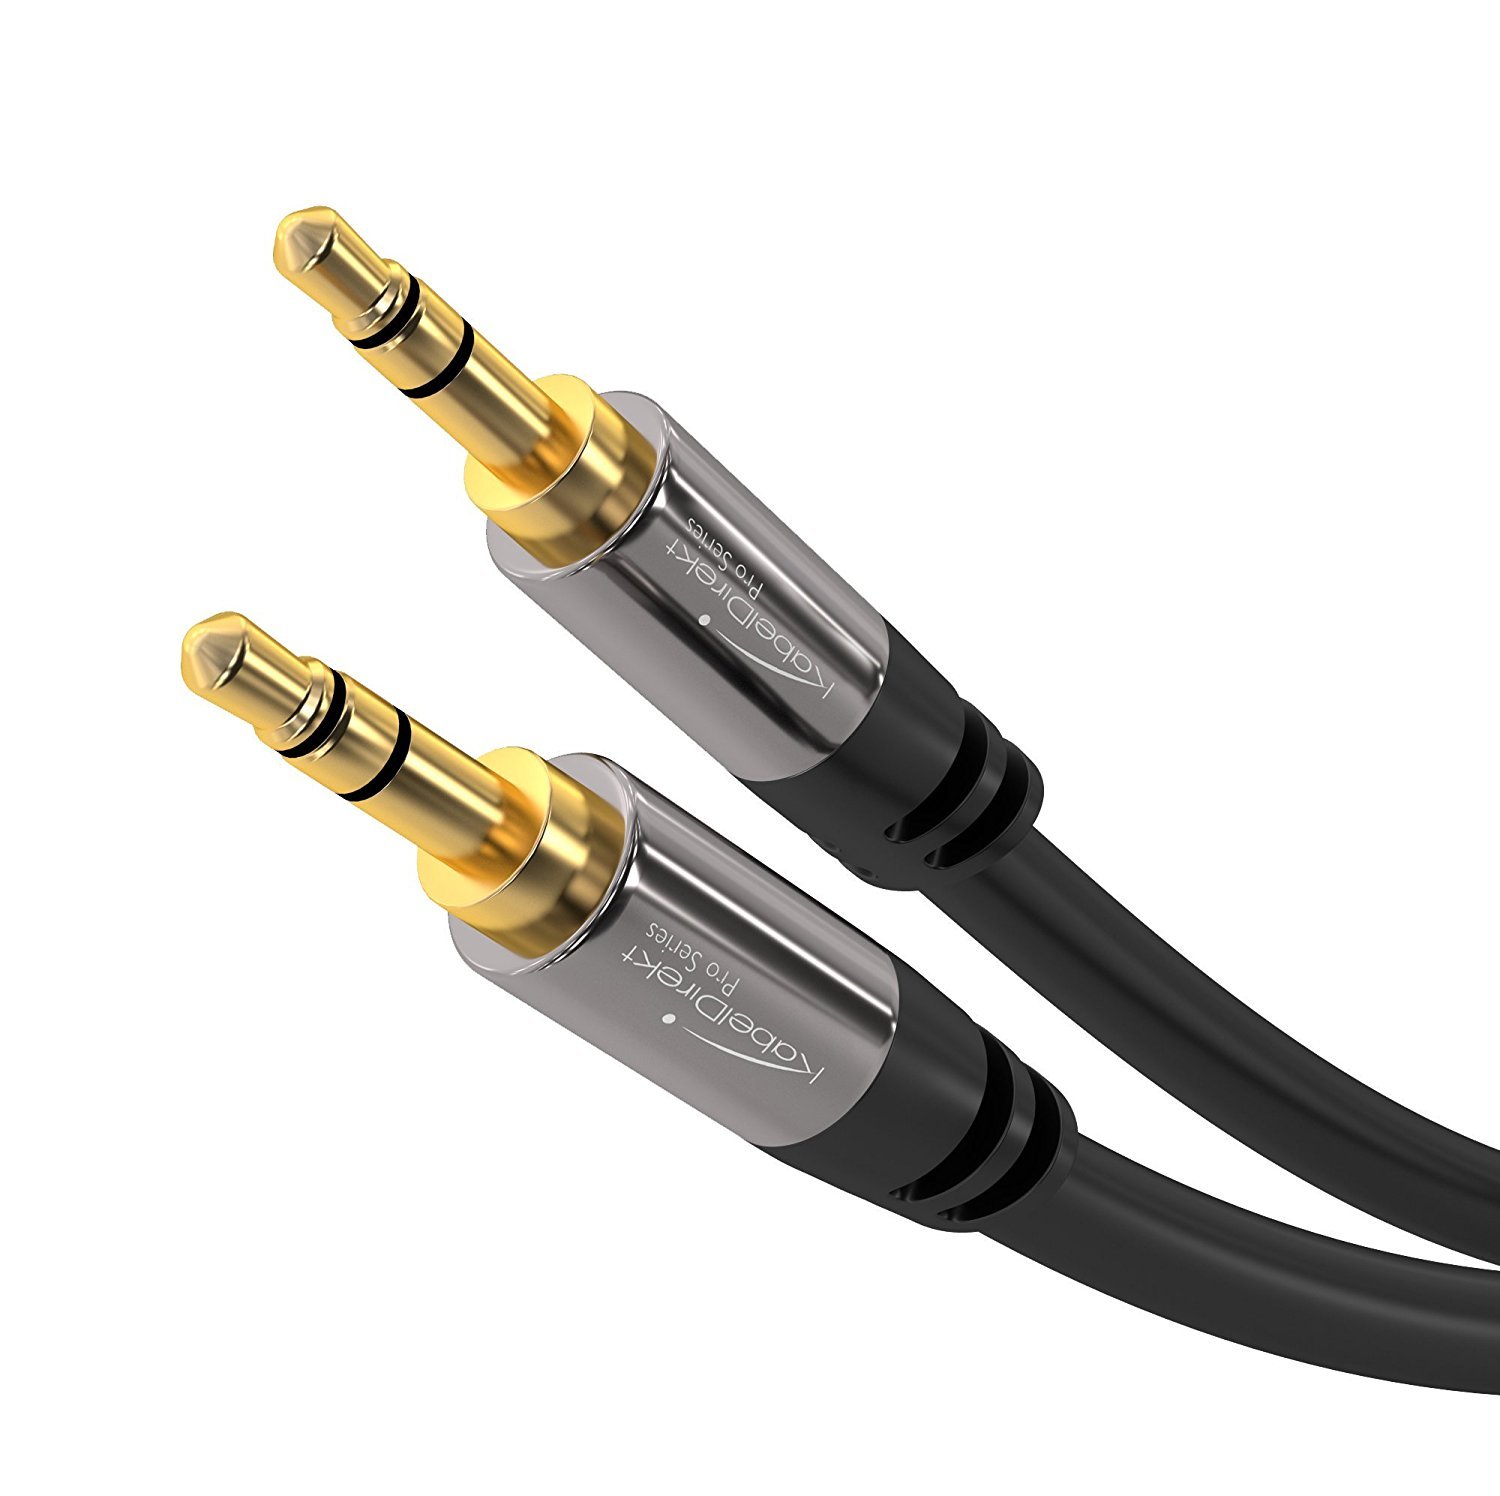 KabelDirekt 3.5mm Audio Auxillary Cable, 10-Foot